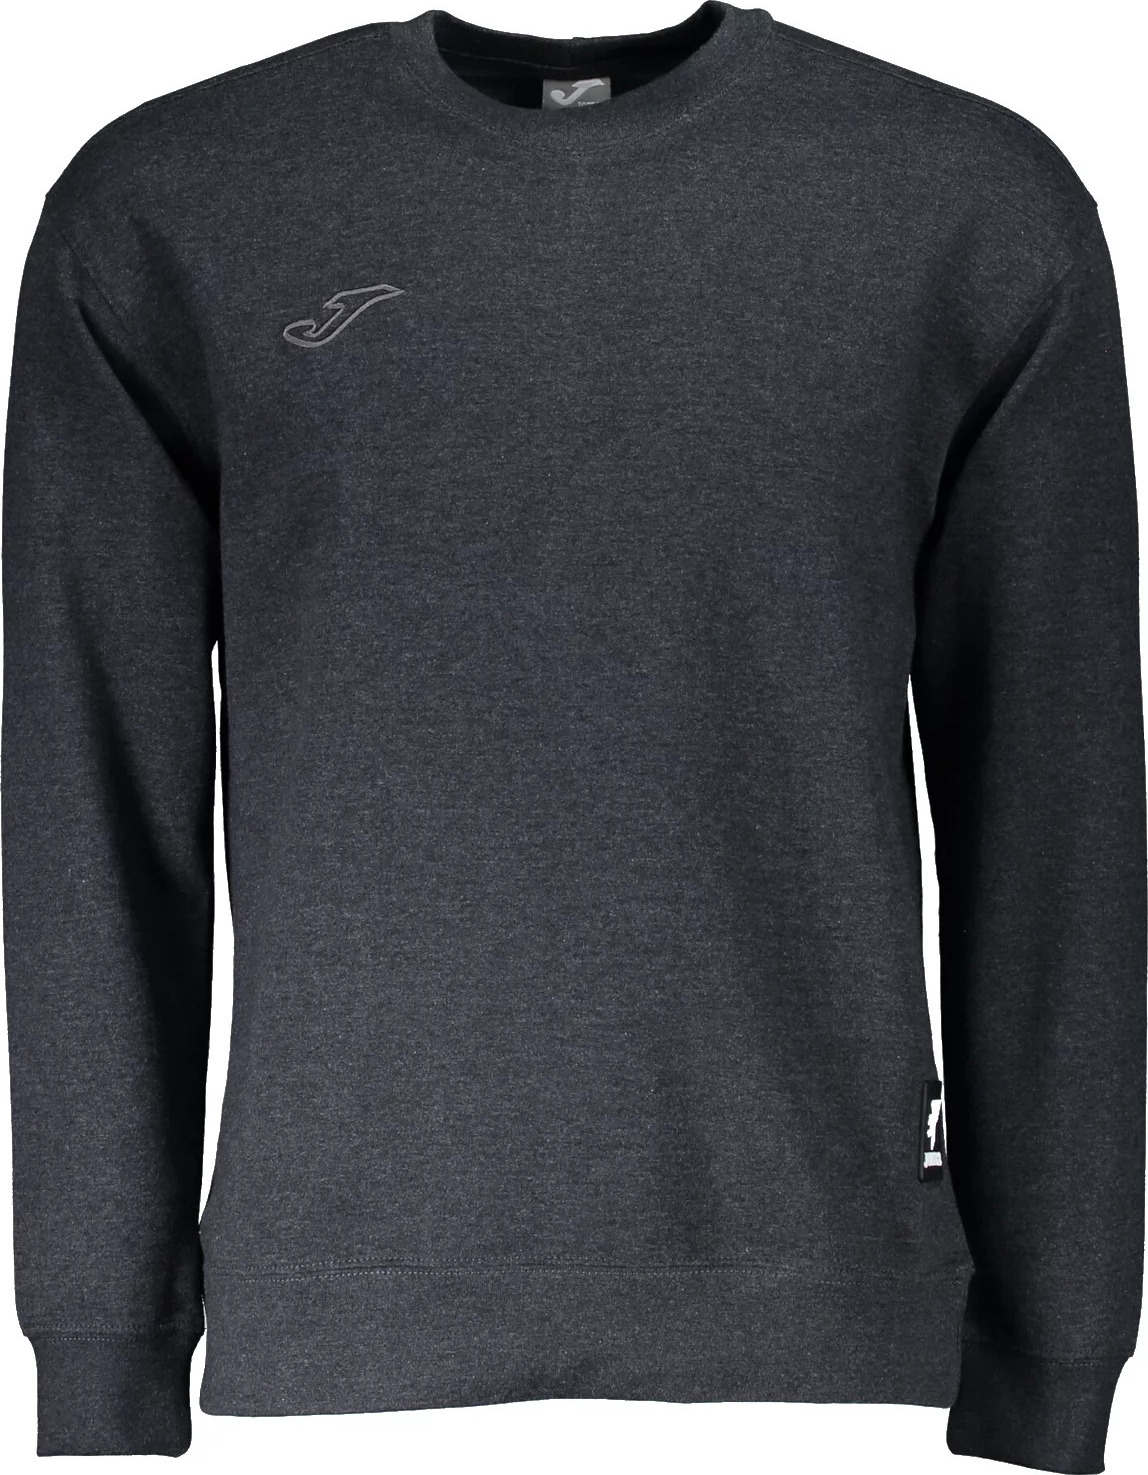 Tmavě šedá pánská mikina Joma Urban Street Sweatshirt 102880-150 Velikost: M